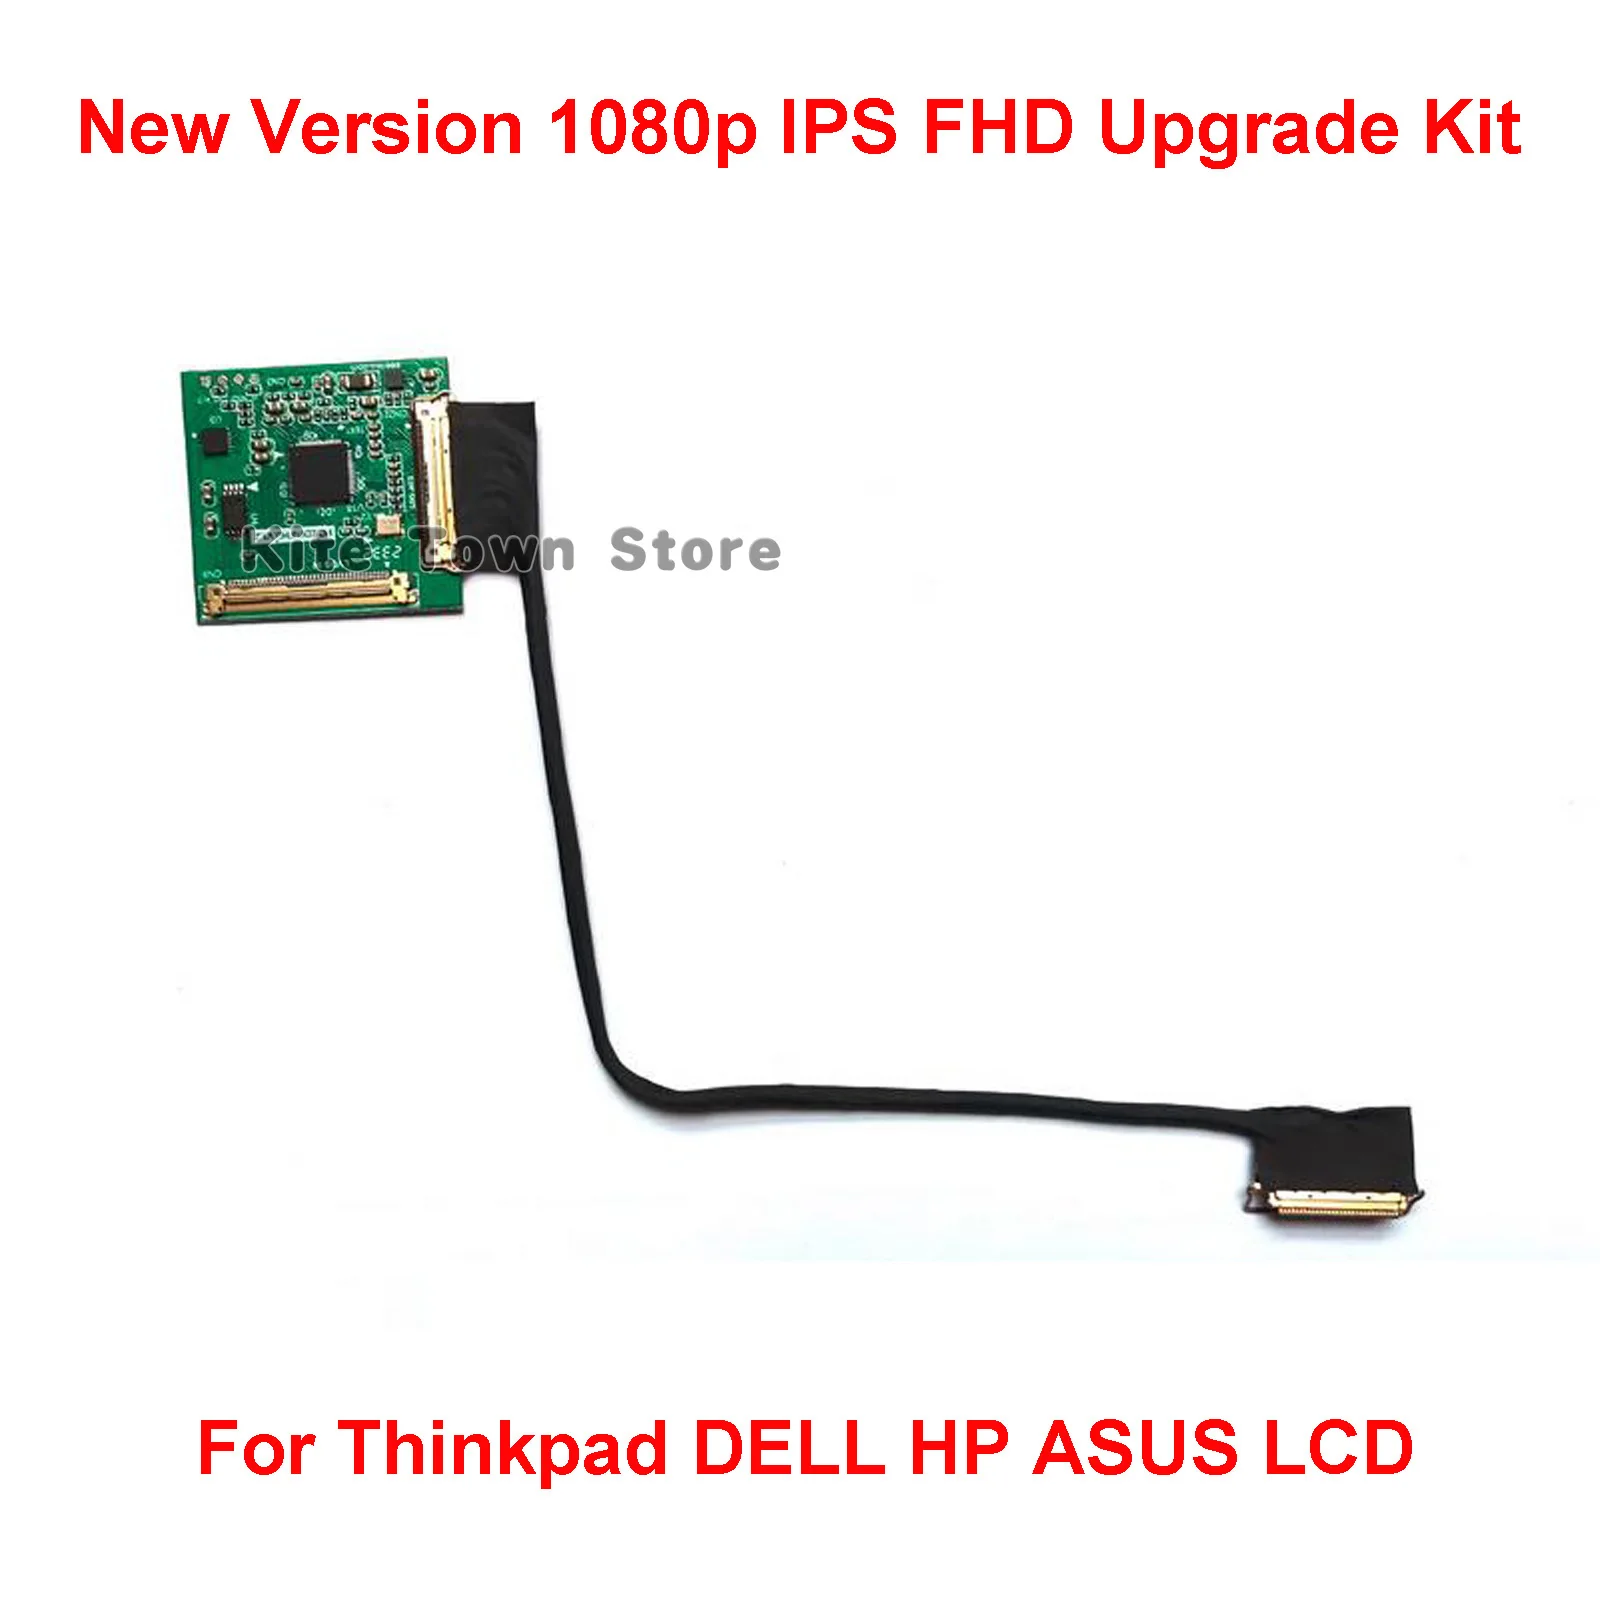 thinkpad新しいバージョンipsfhdthinkpad-t430t430sdellhpasus1080p用のアップグレードキット